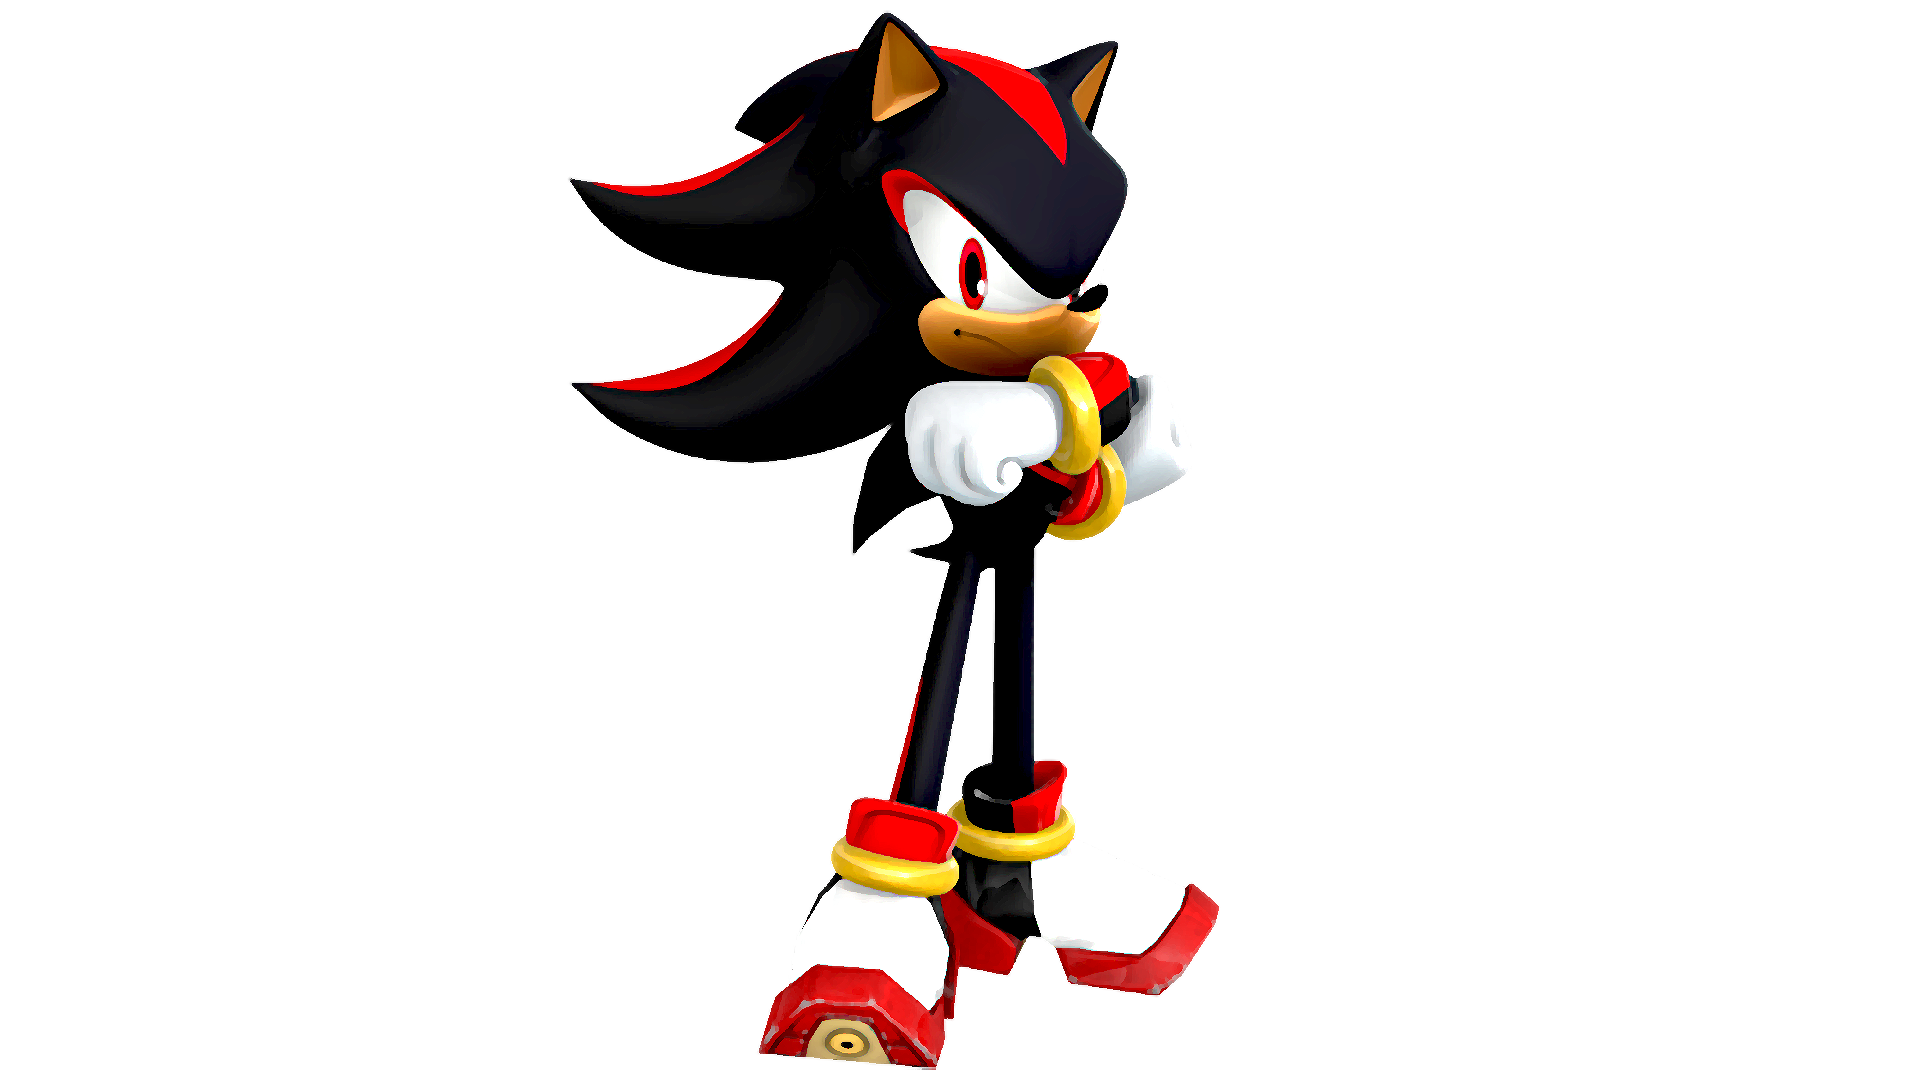 Sonic Speed Simulator Render - Classic Sonic by ShadowFriendly on DeviantArt